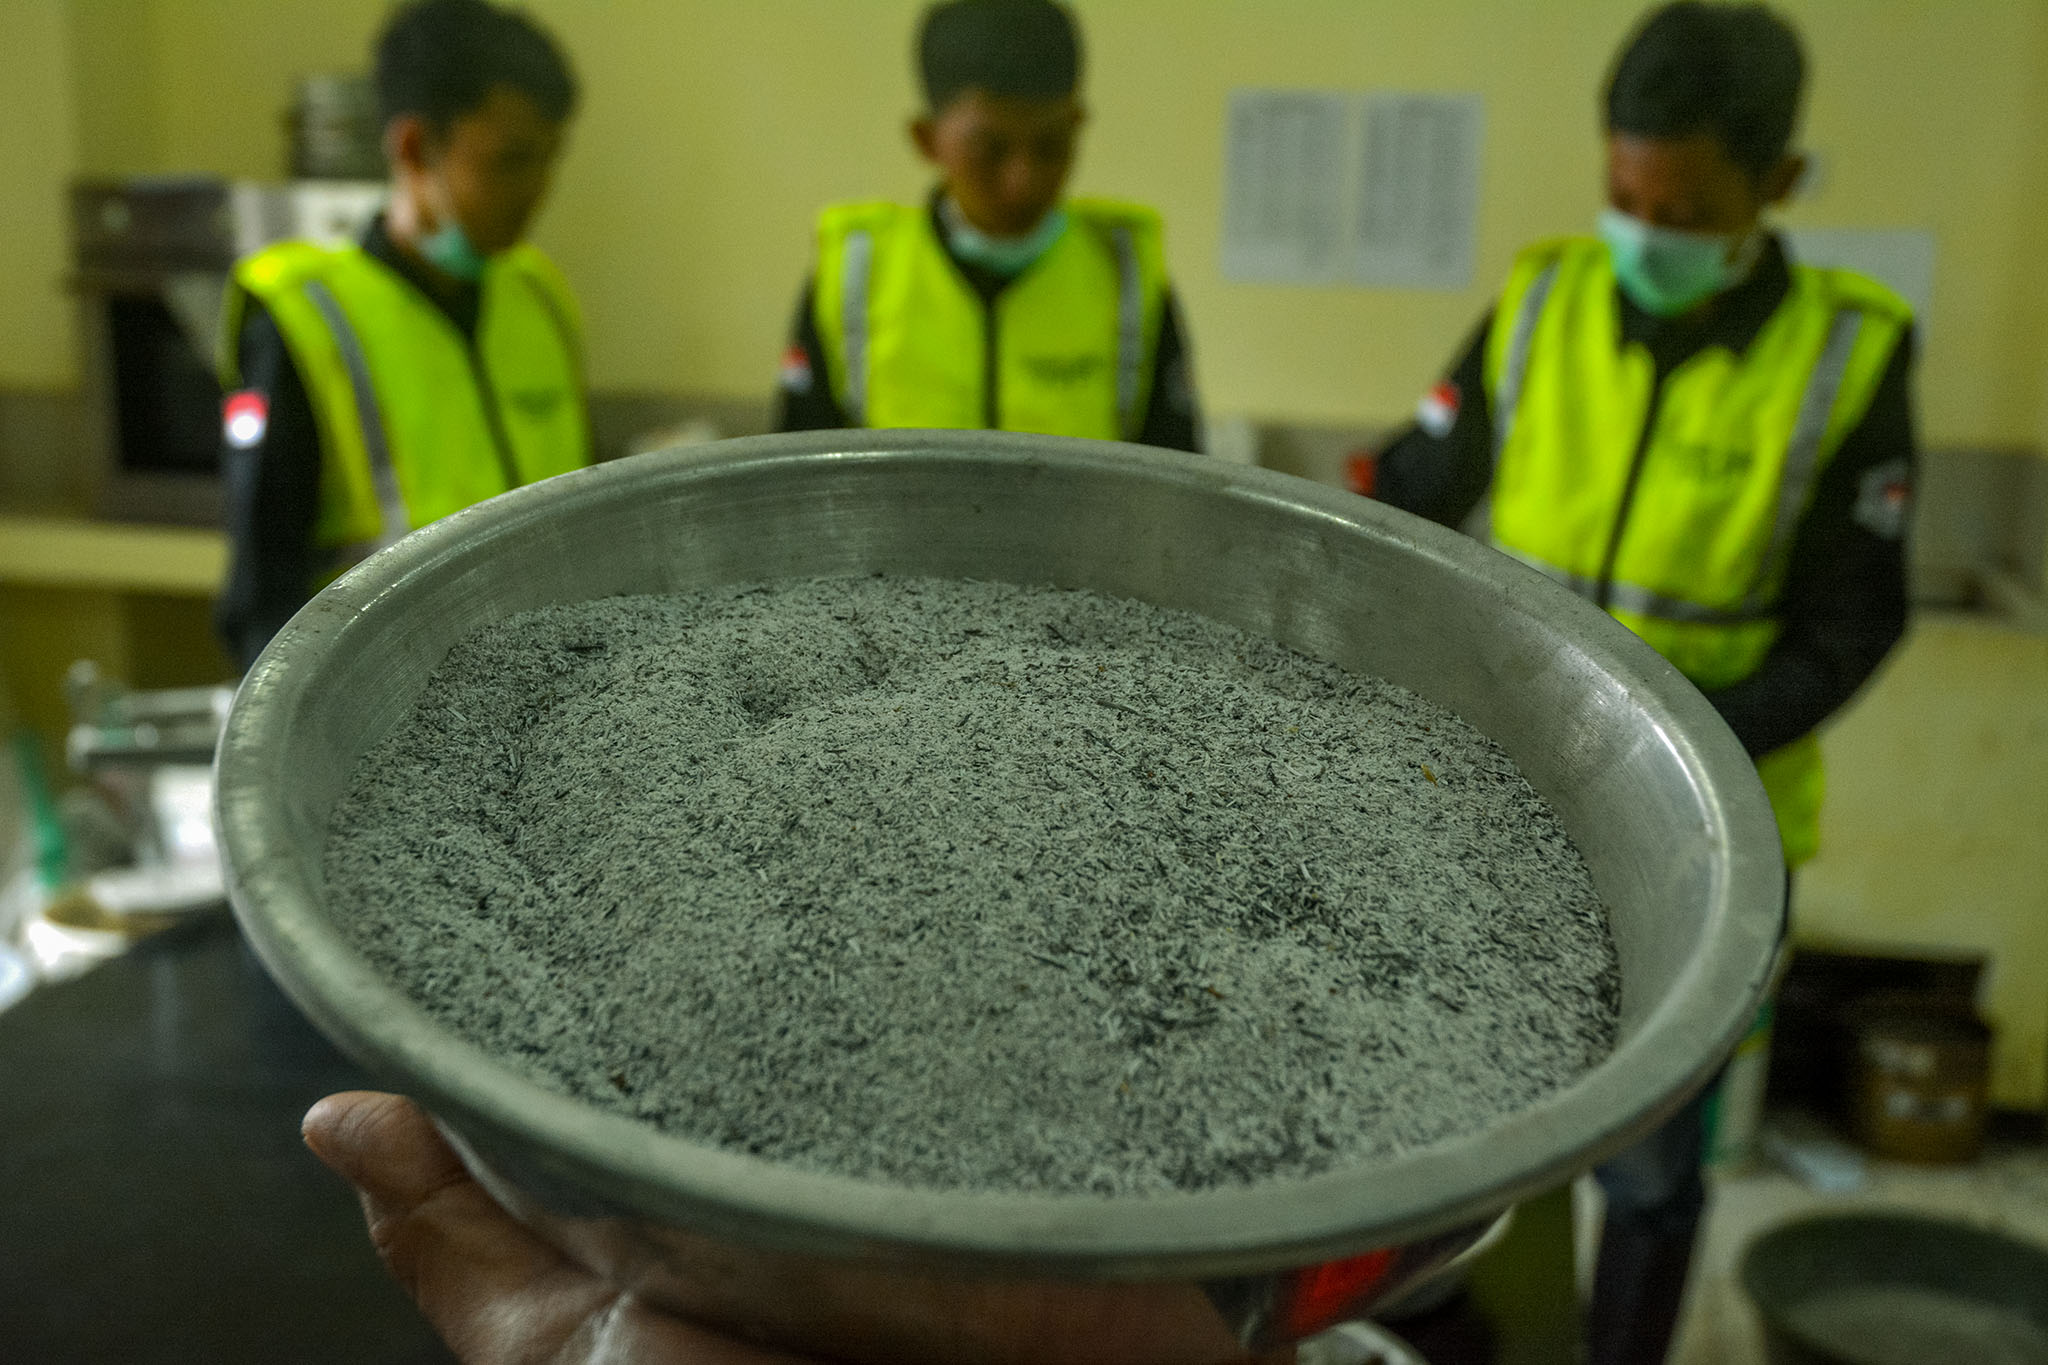 Abu sekam yang digunakan sebagai campuran pembuatan beton dapat mengurangi bahan semen. Foto : L Darmawan/Mongabay Indonesia